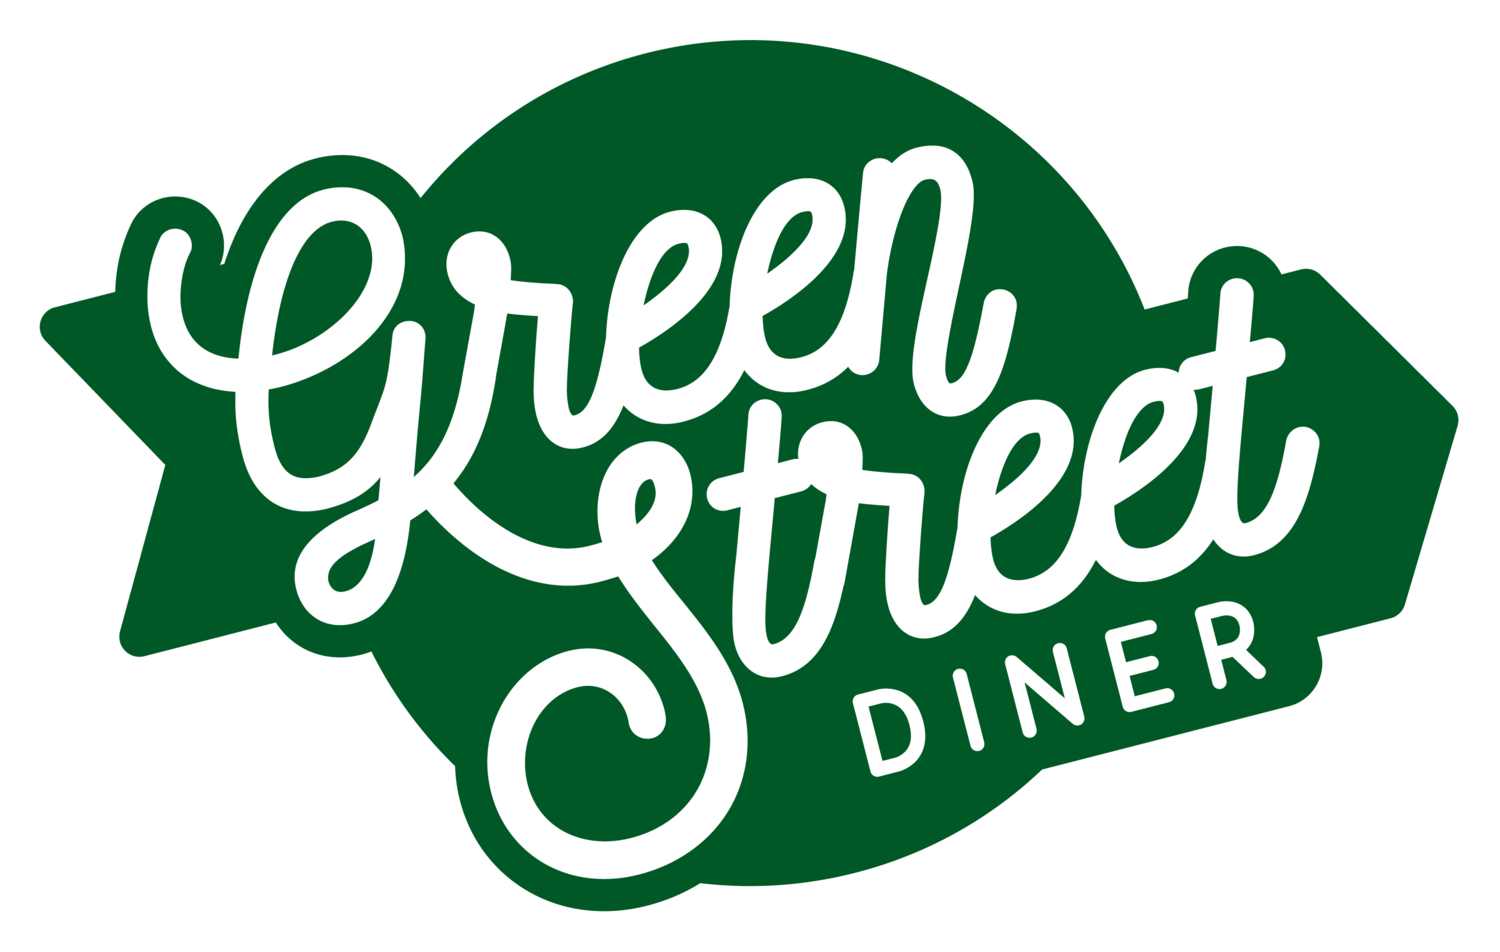 Green Street Diner